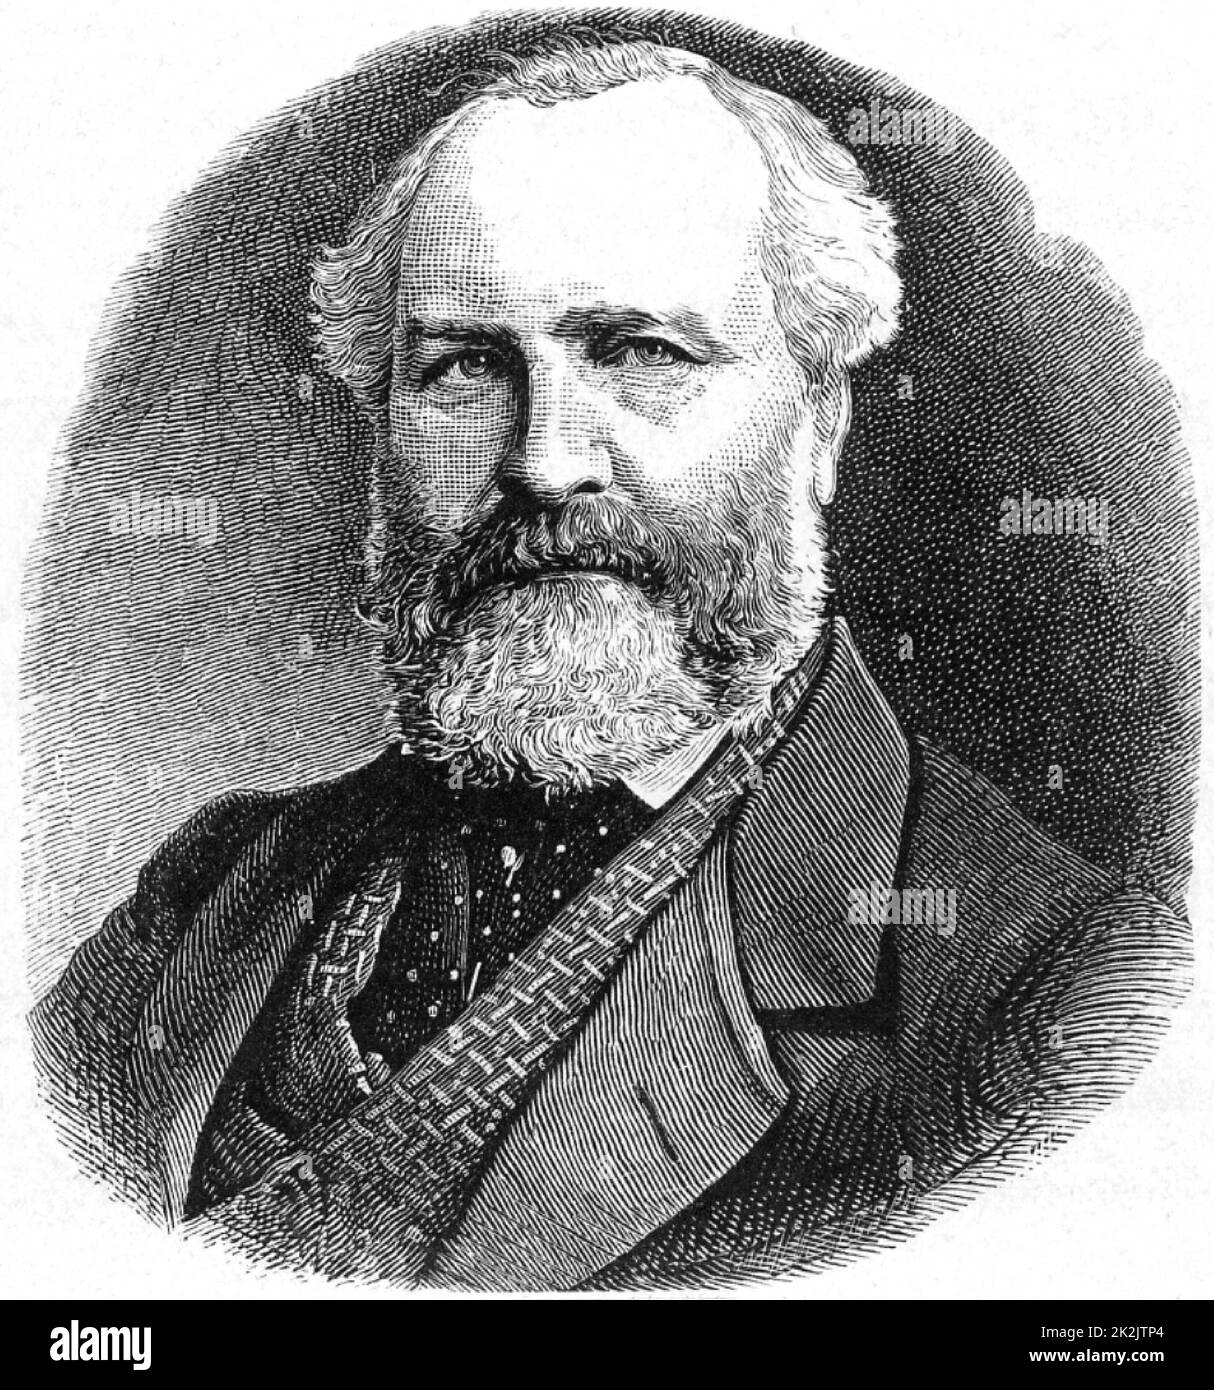 Thomas Davidson (1817-1885) British palaeontologist. From 'Life of Sir Roderick I. Murchison' by Archibald Geikie (London, 1875). Engraving. Stock Photo